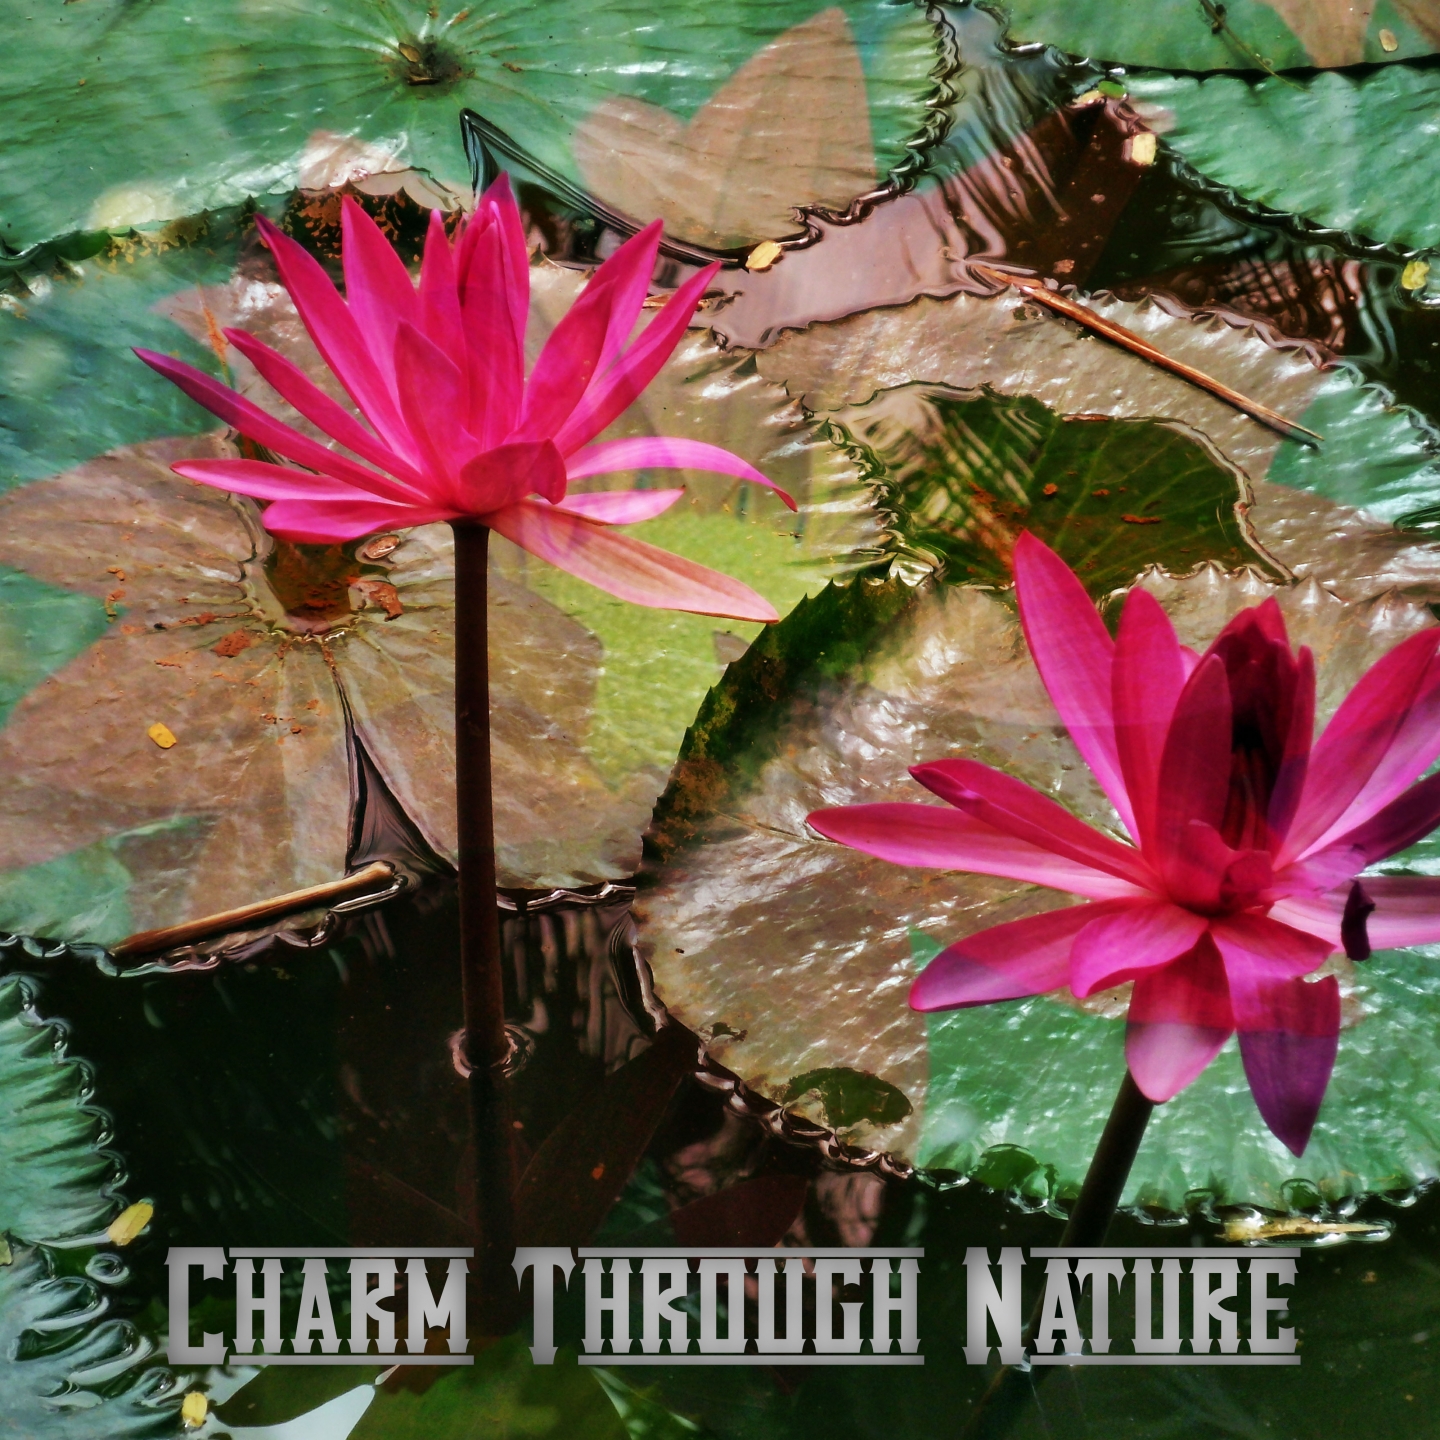 Charm Through Nature